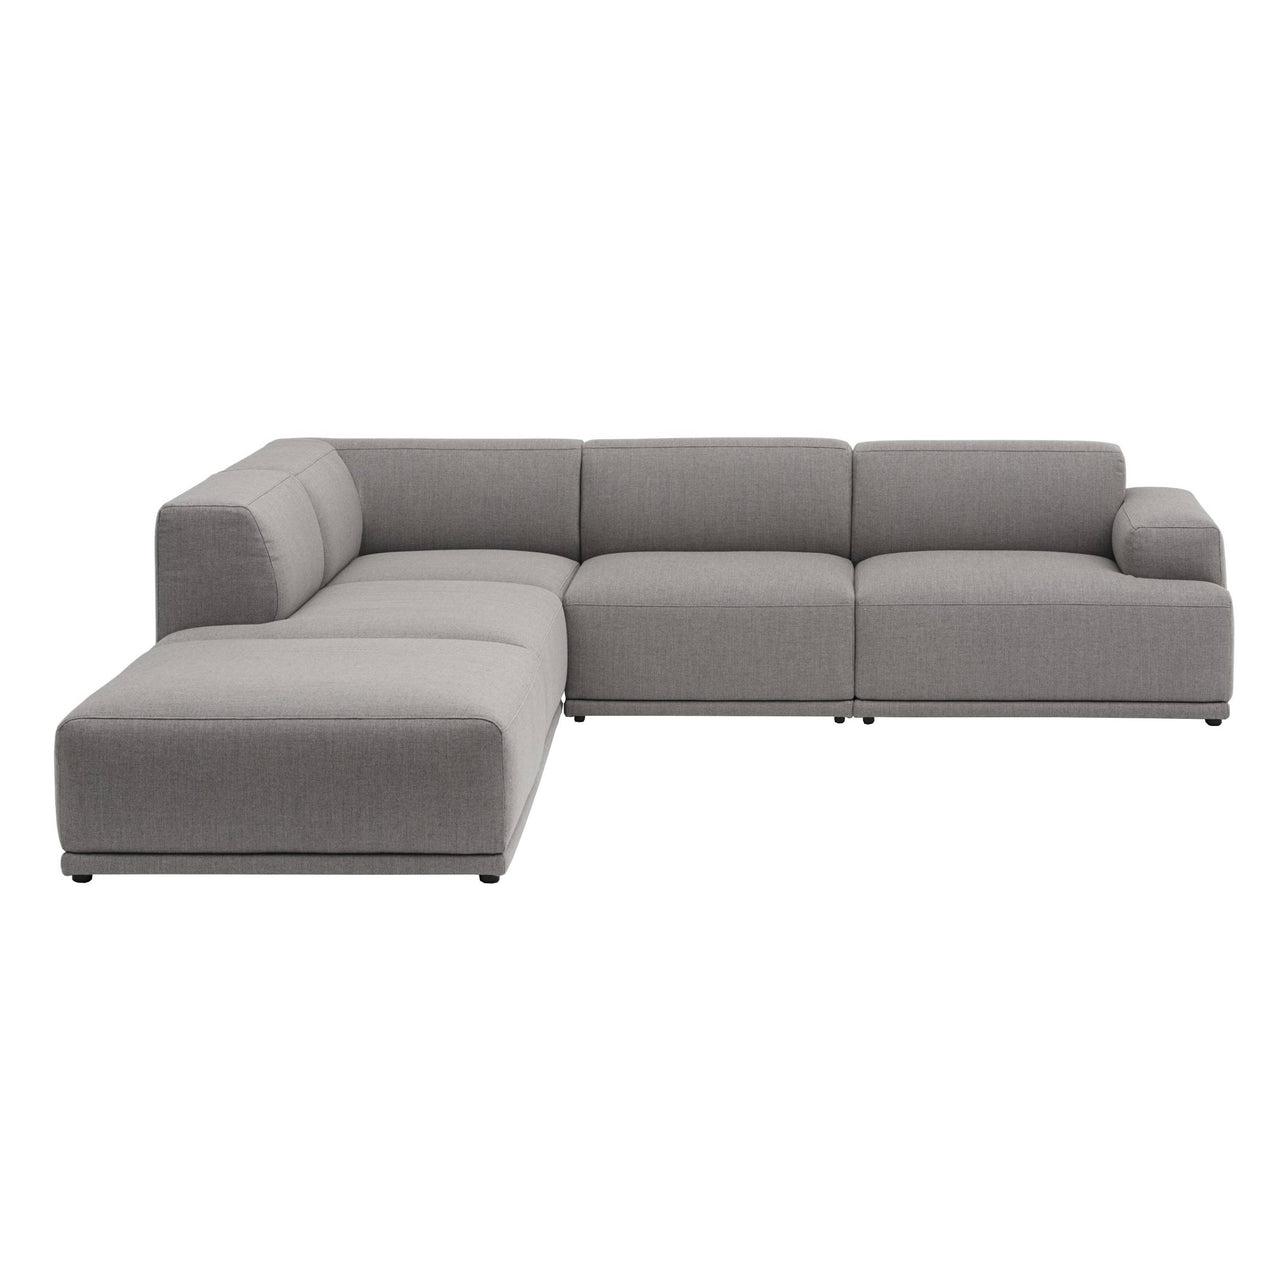 Connect Soft Modular Sofa: Corner + Configuration 1 + Stocked: Re-wool 128